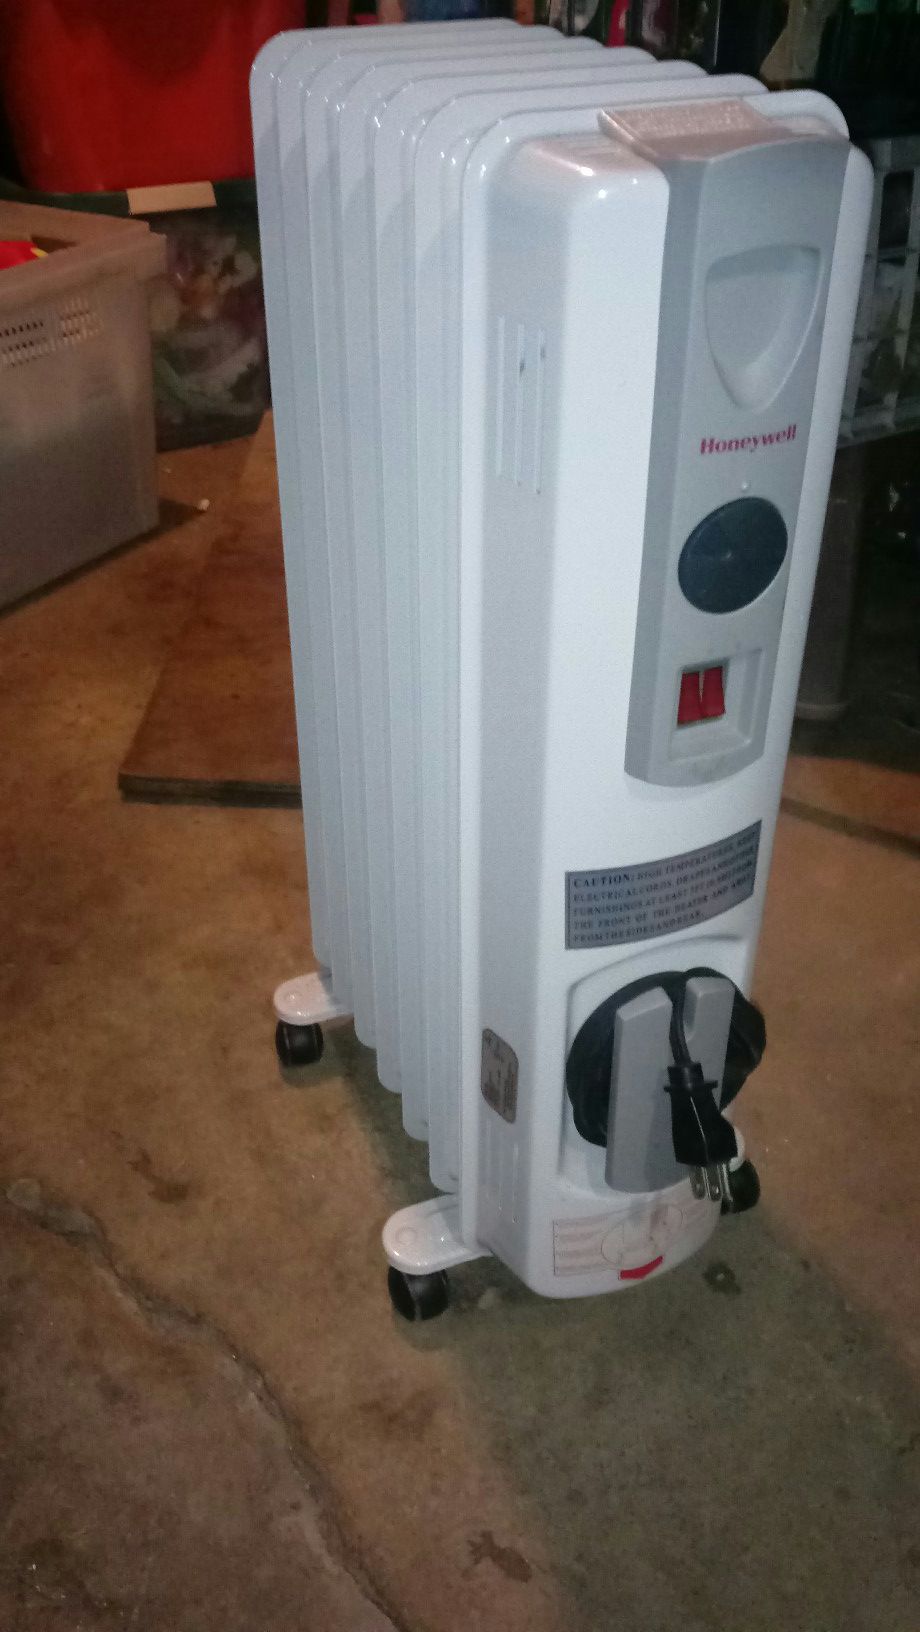 Honeywell radiant heater 1500 watts